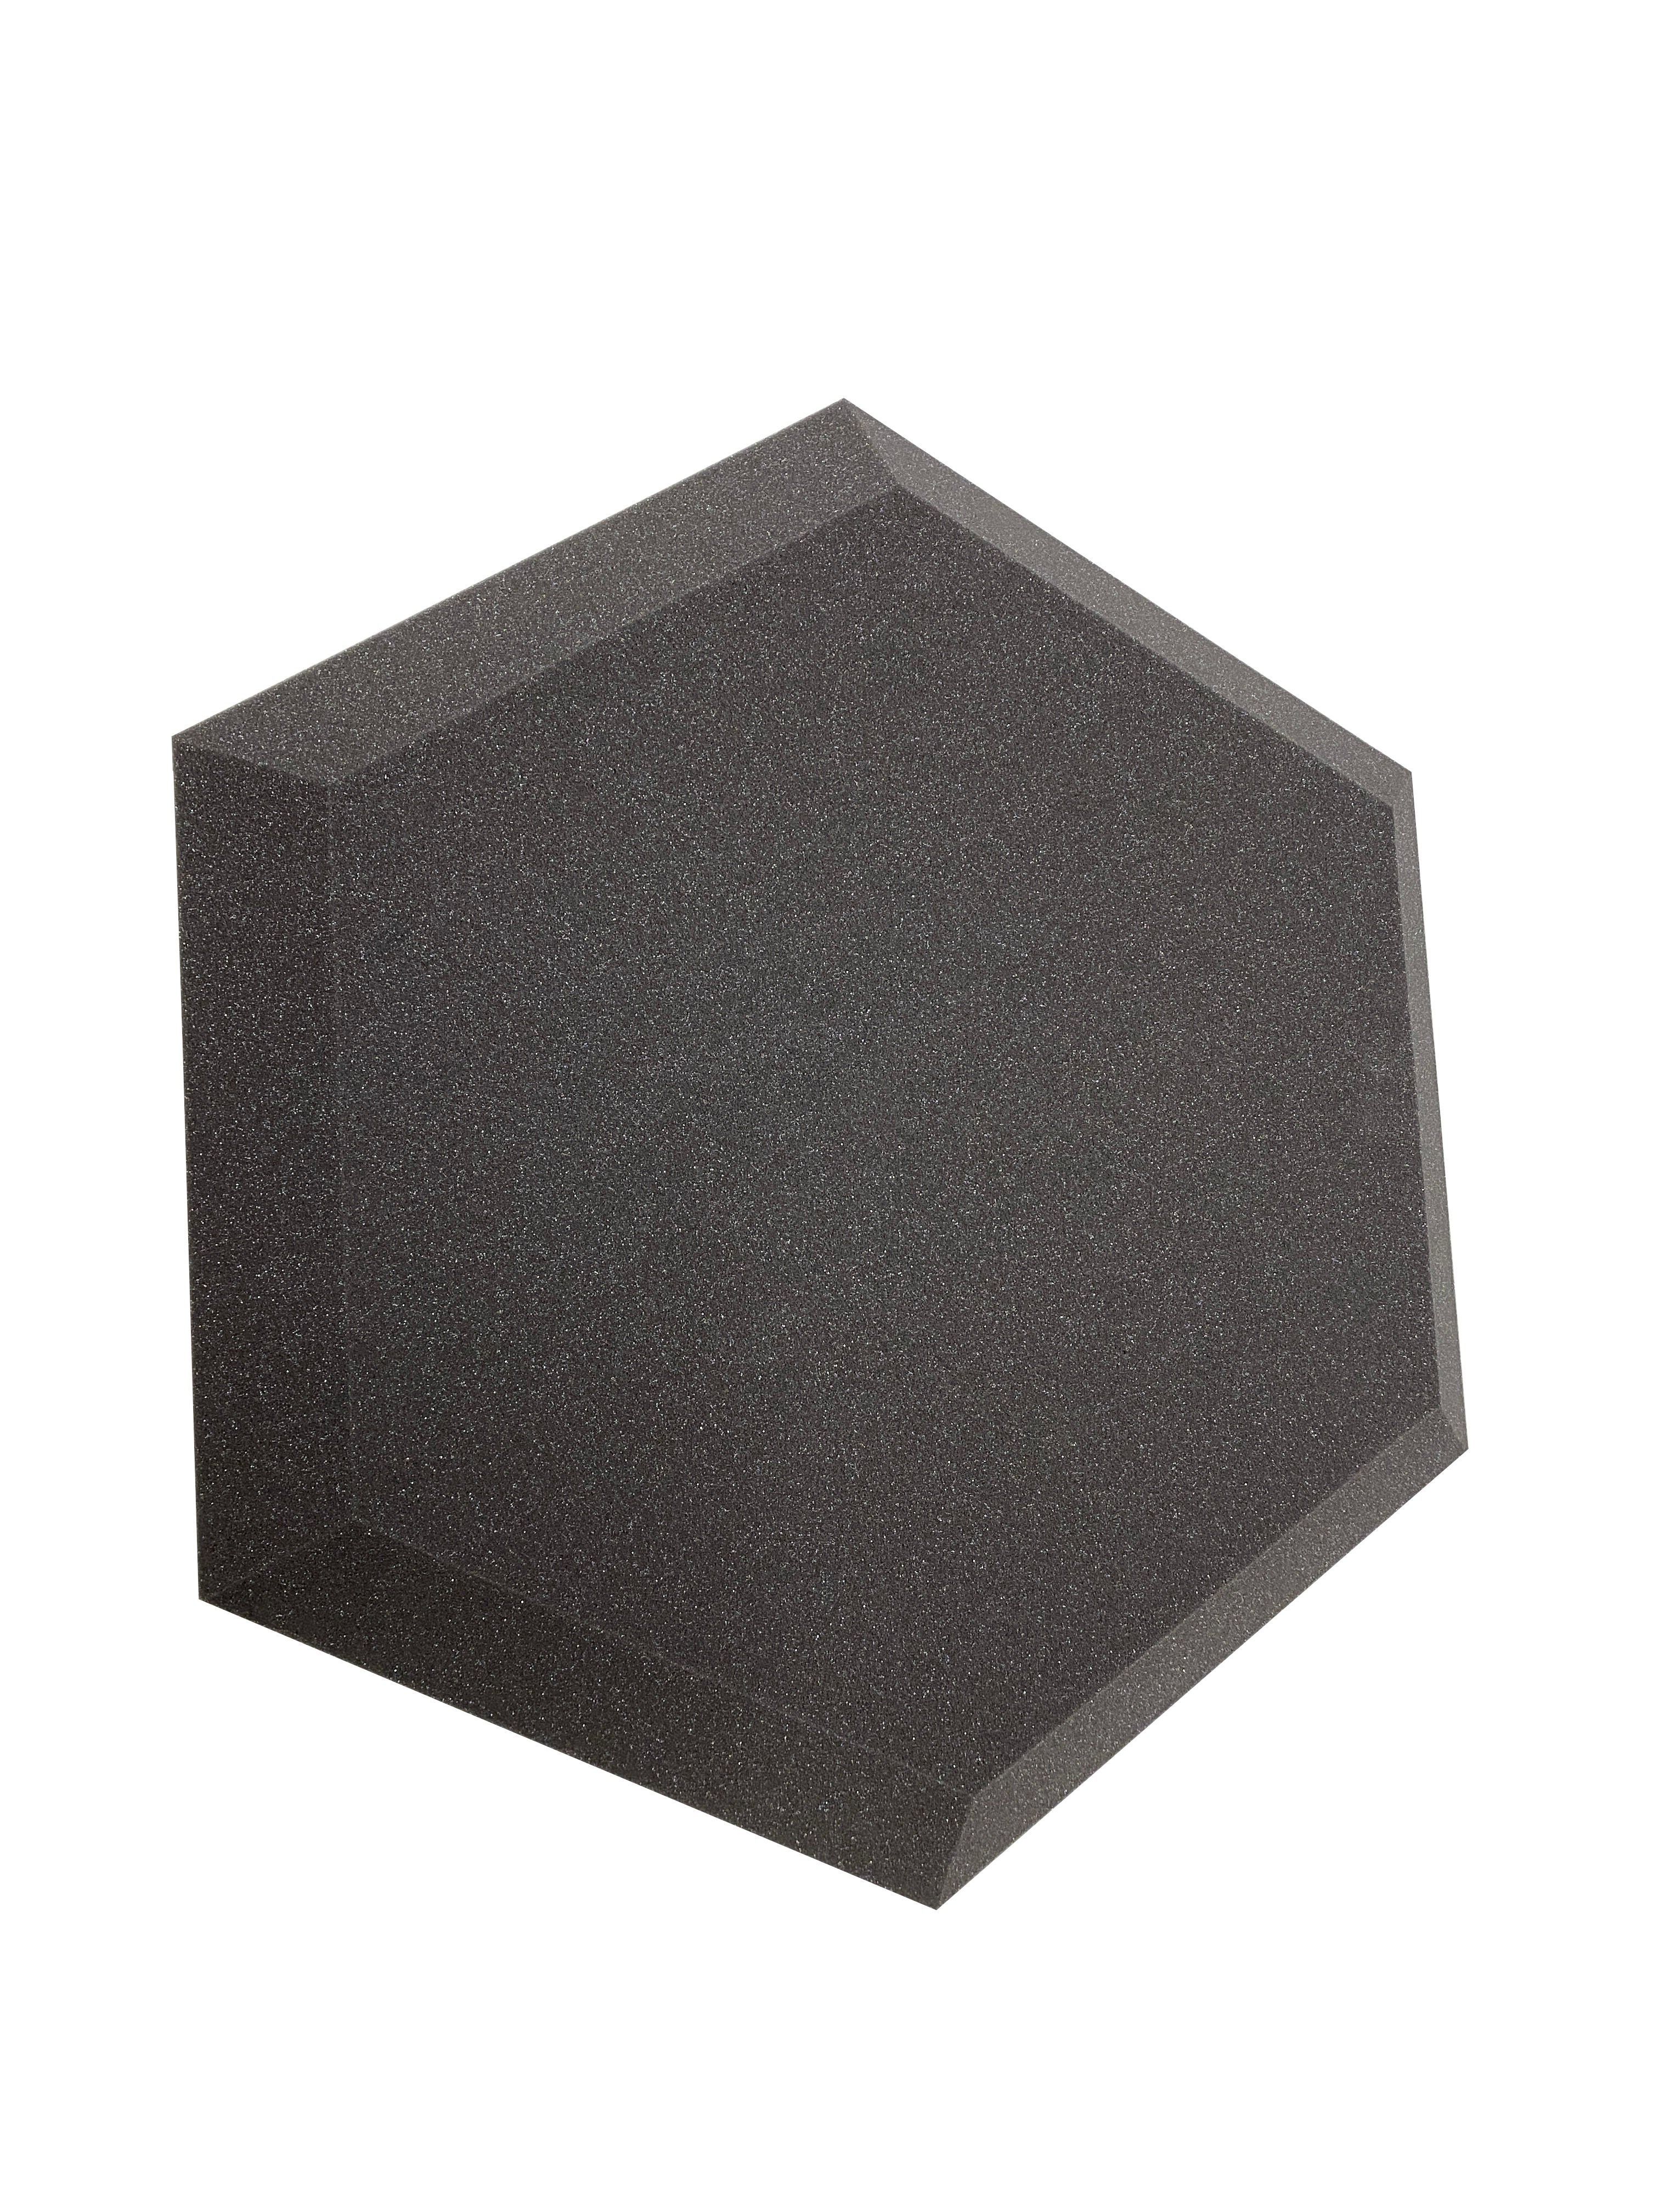 Buy mid-grey Hexatile3 Acoustic Studio Foam Tile Pack